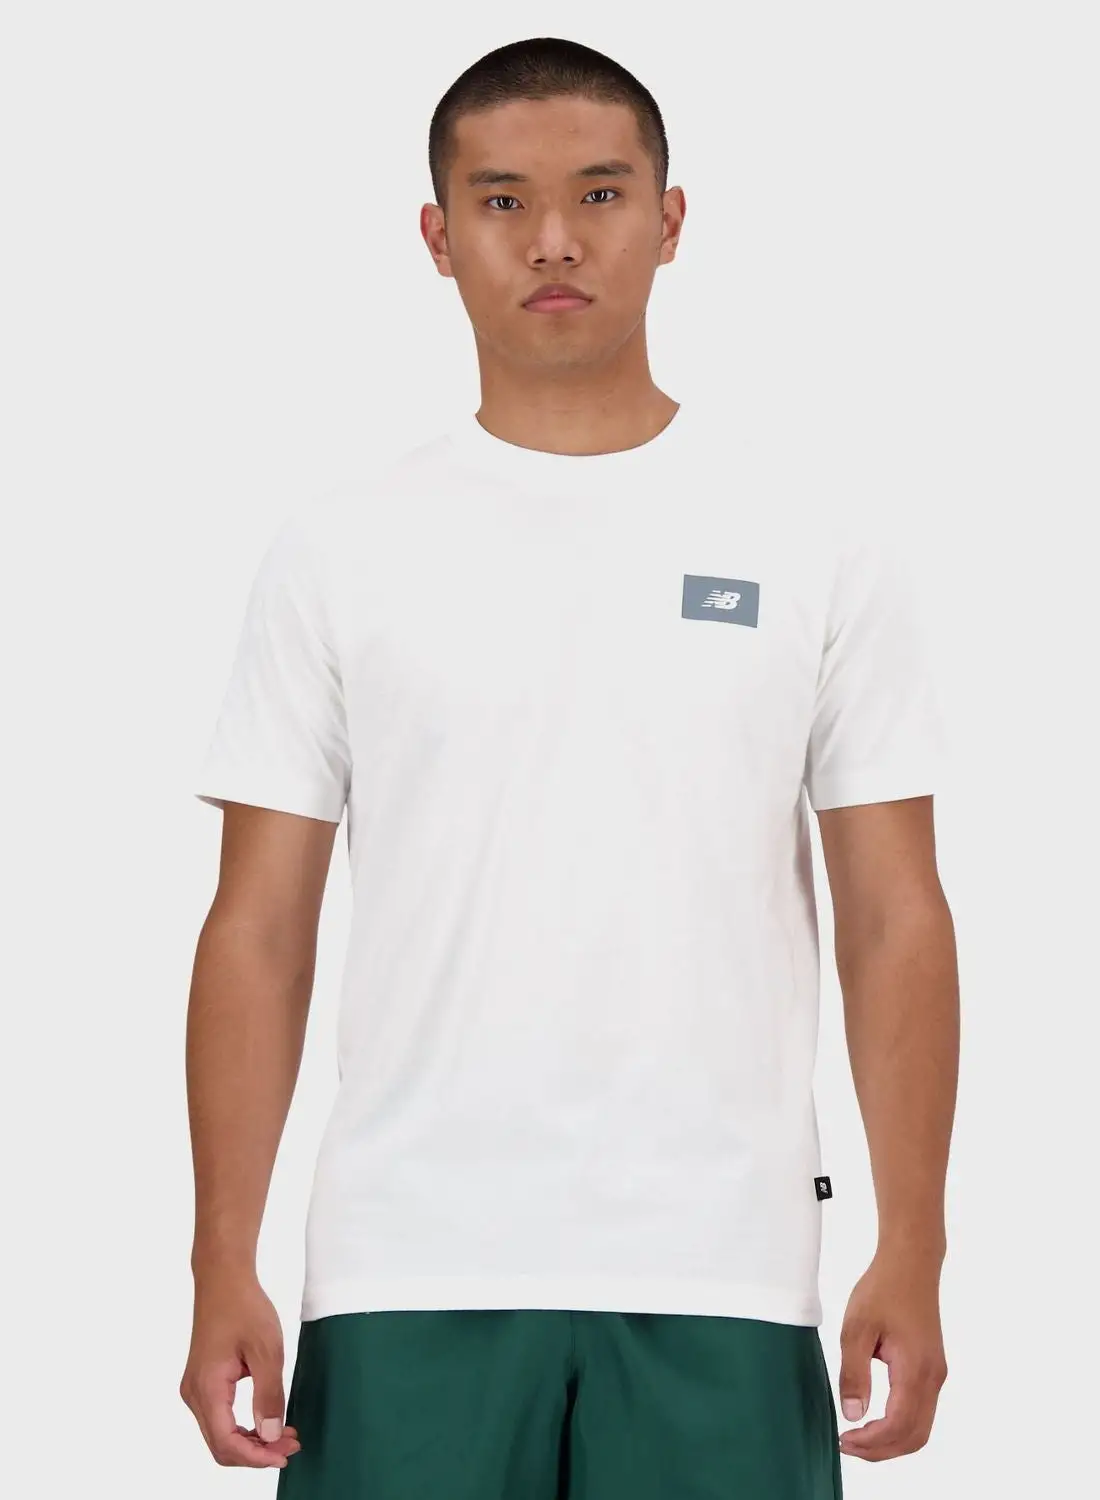 New Balance Logo T-Shirt